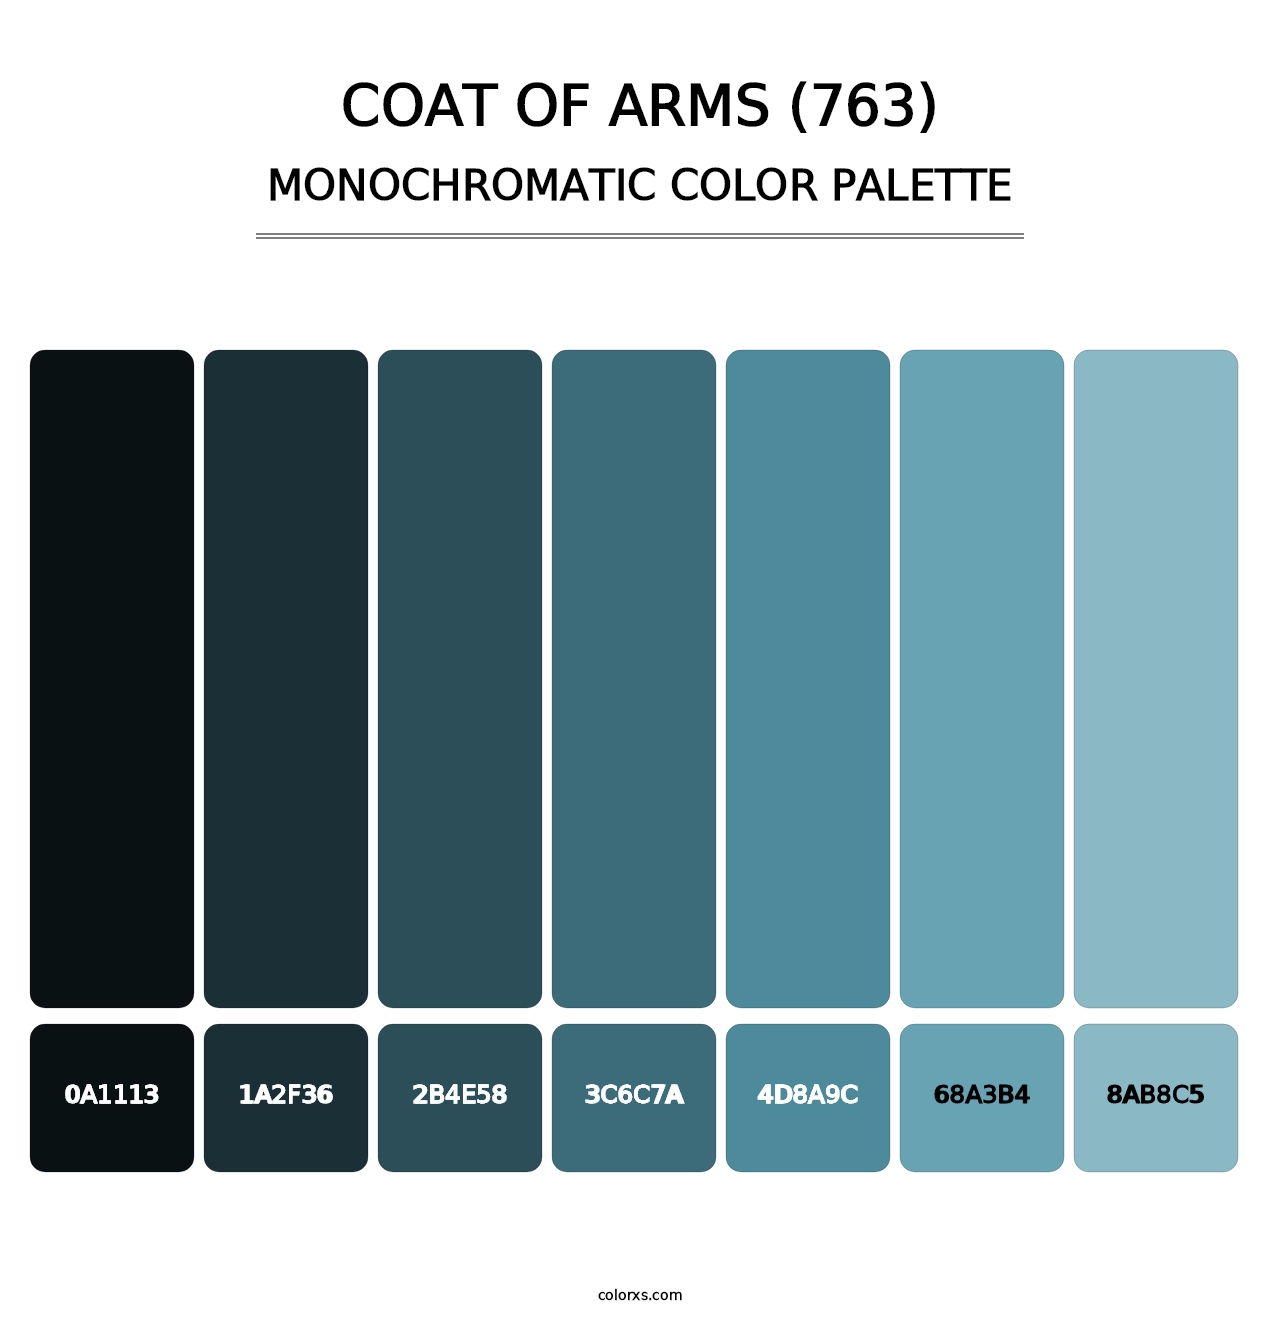 Coat of Arms (763) - Monochromatic Color Palette